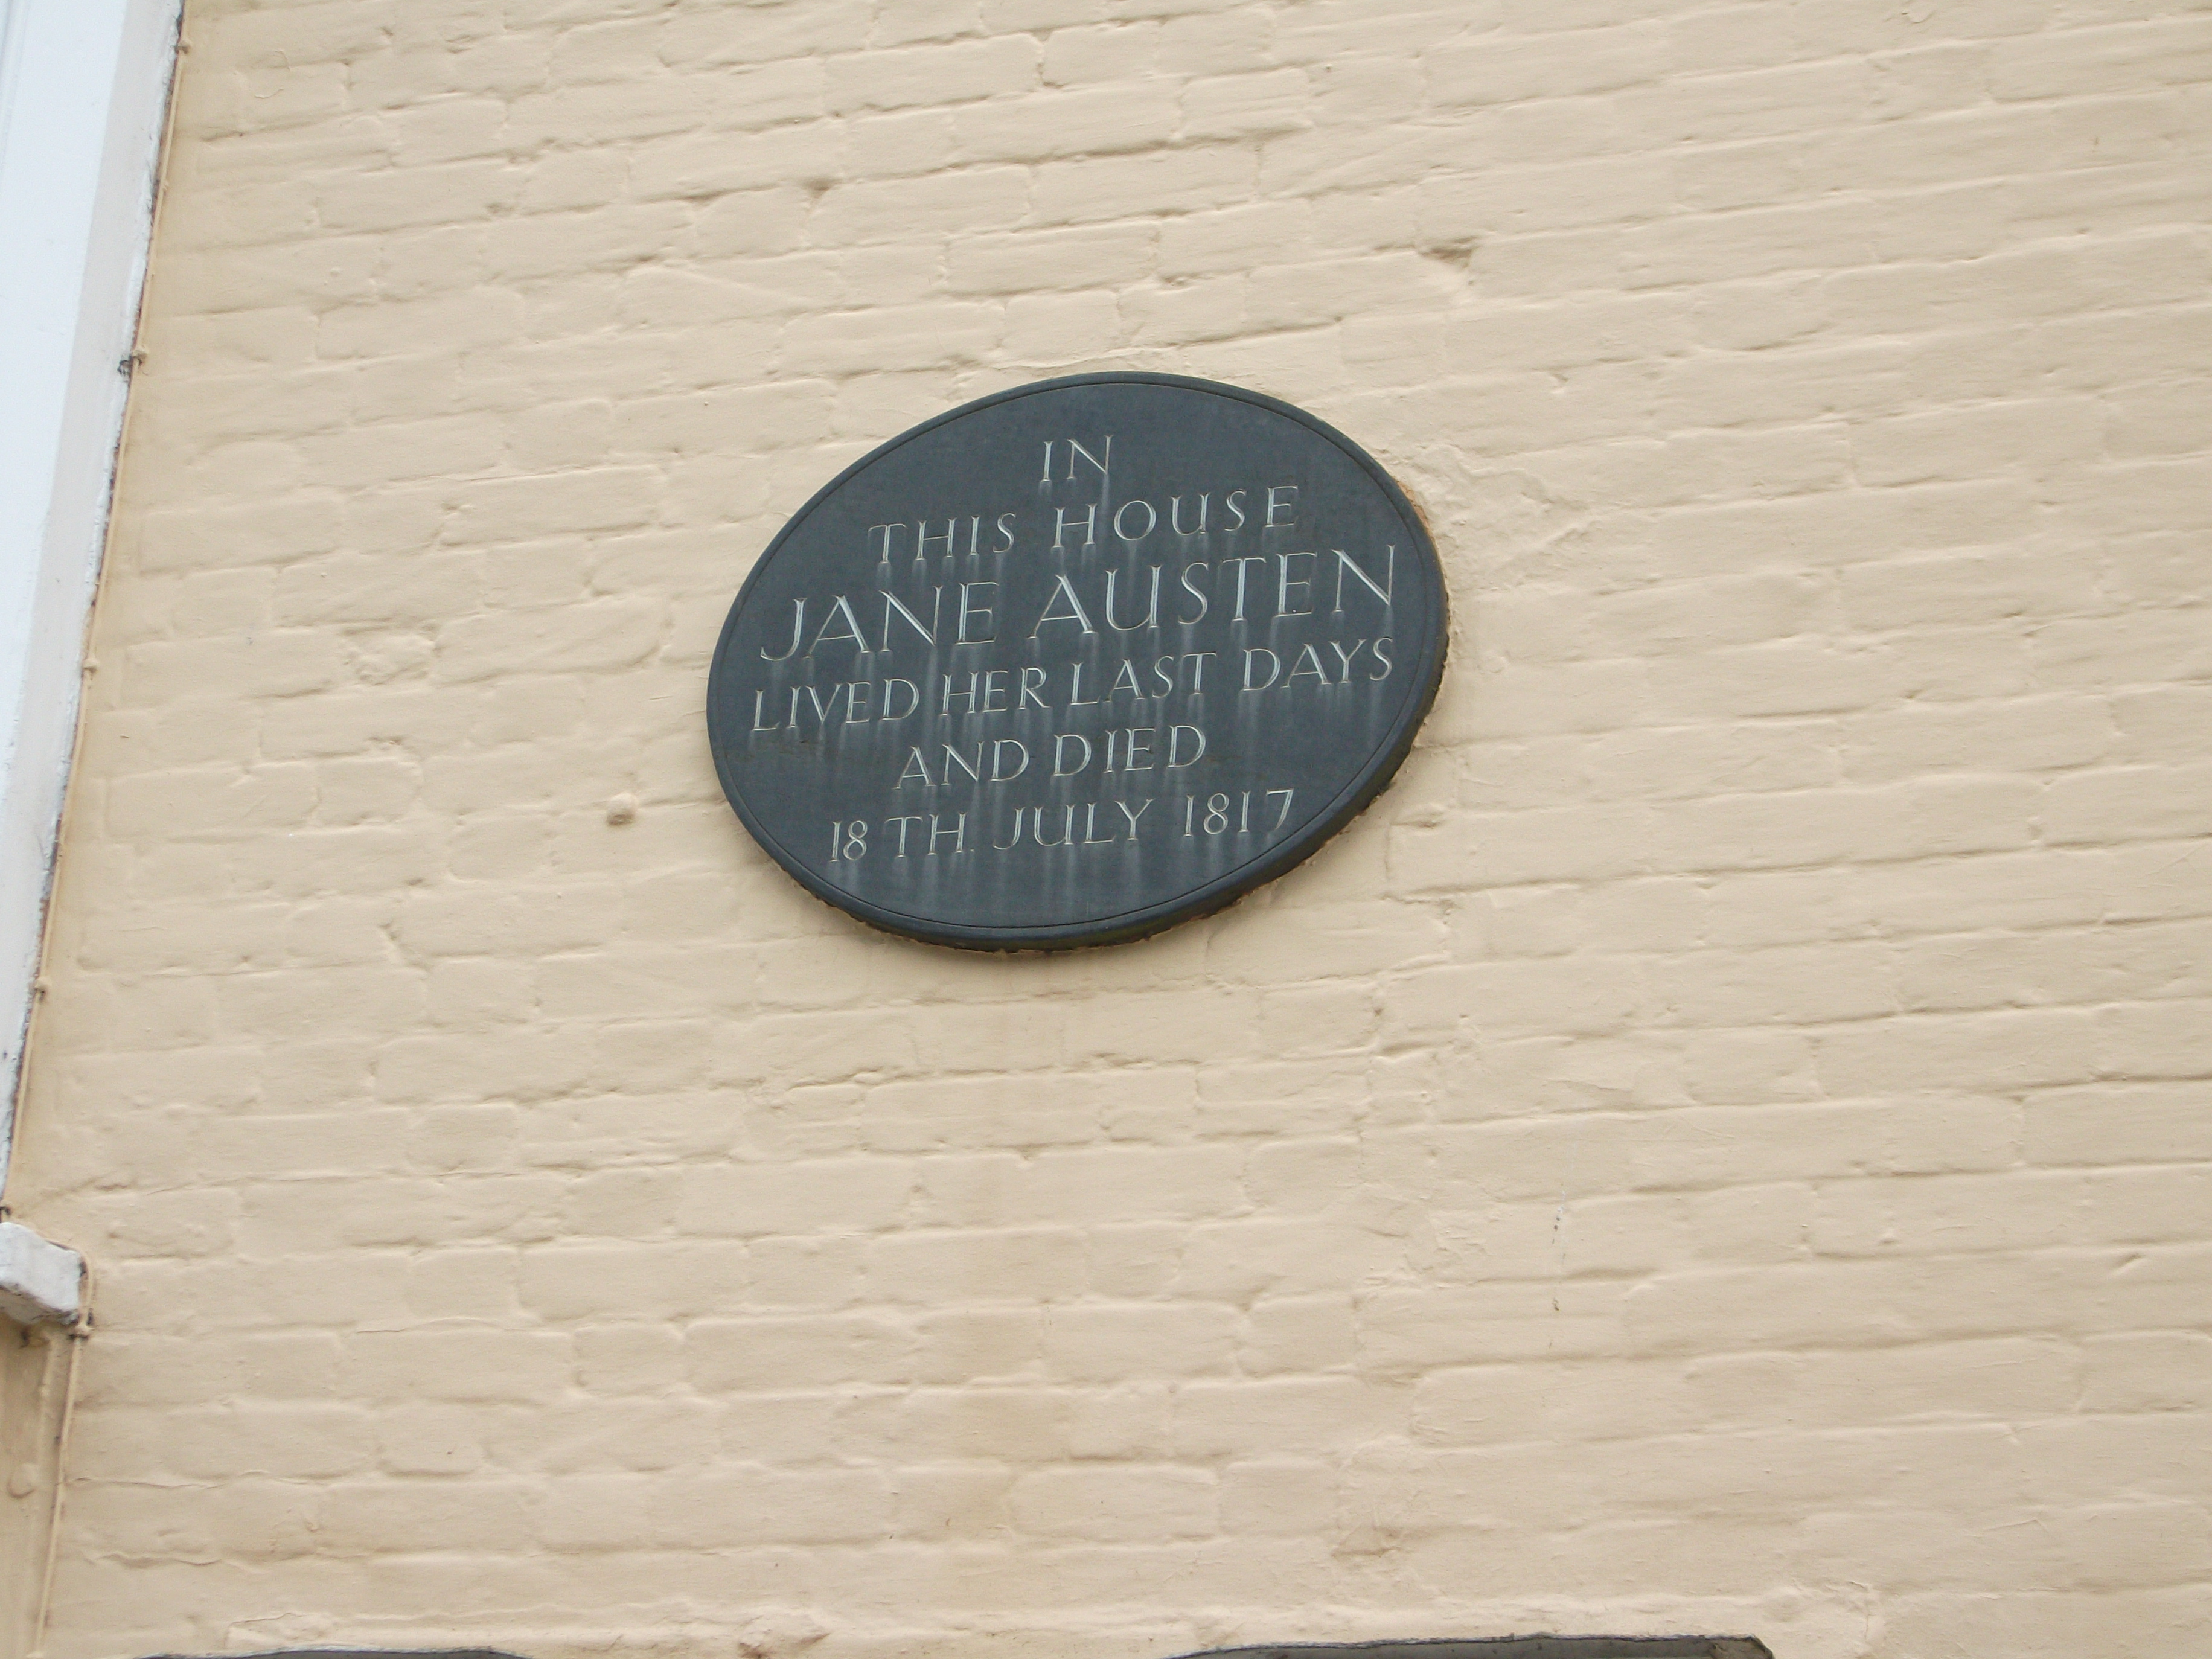 Jane Austen's doctor's house